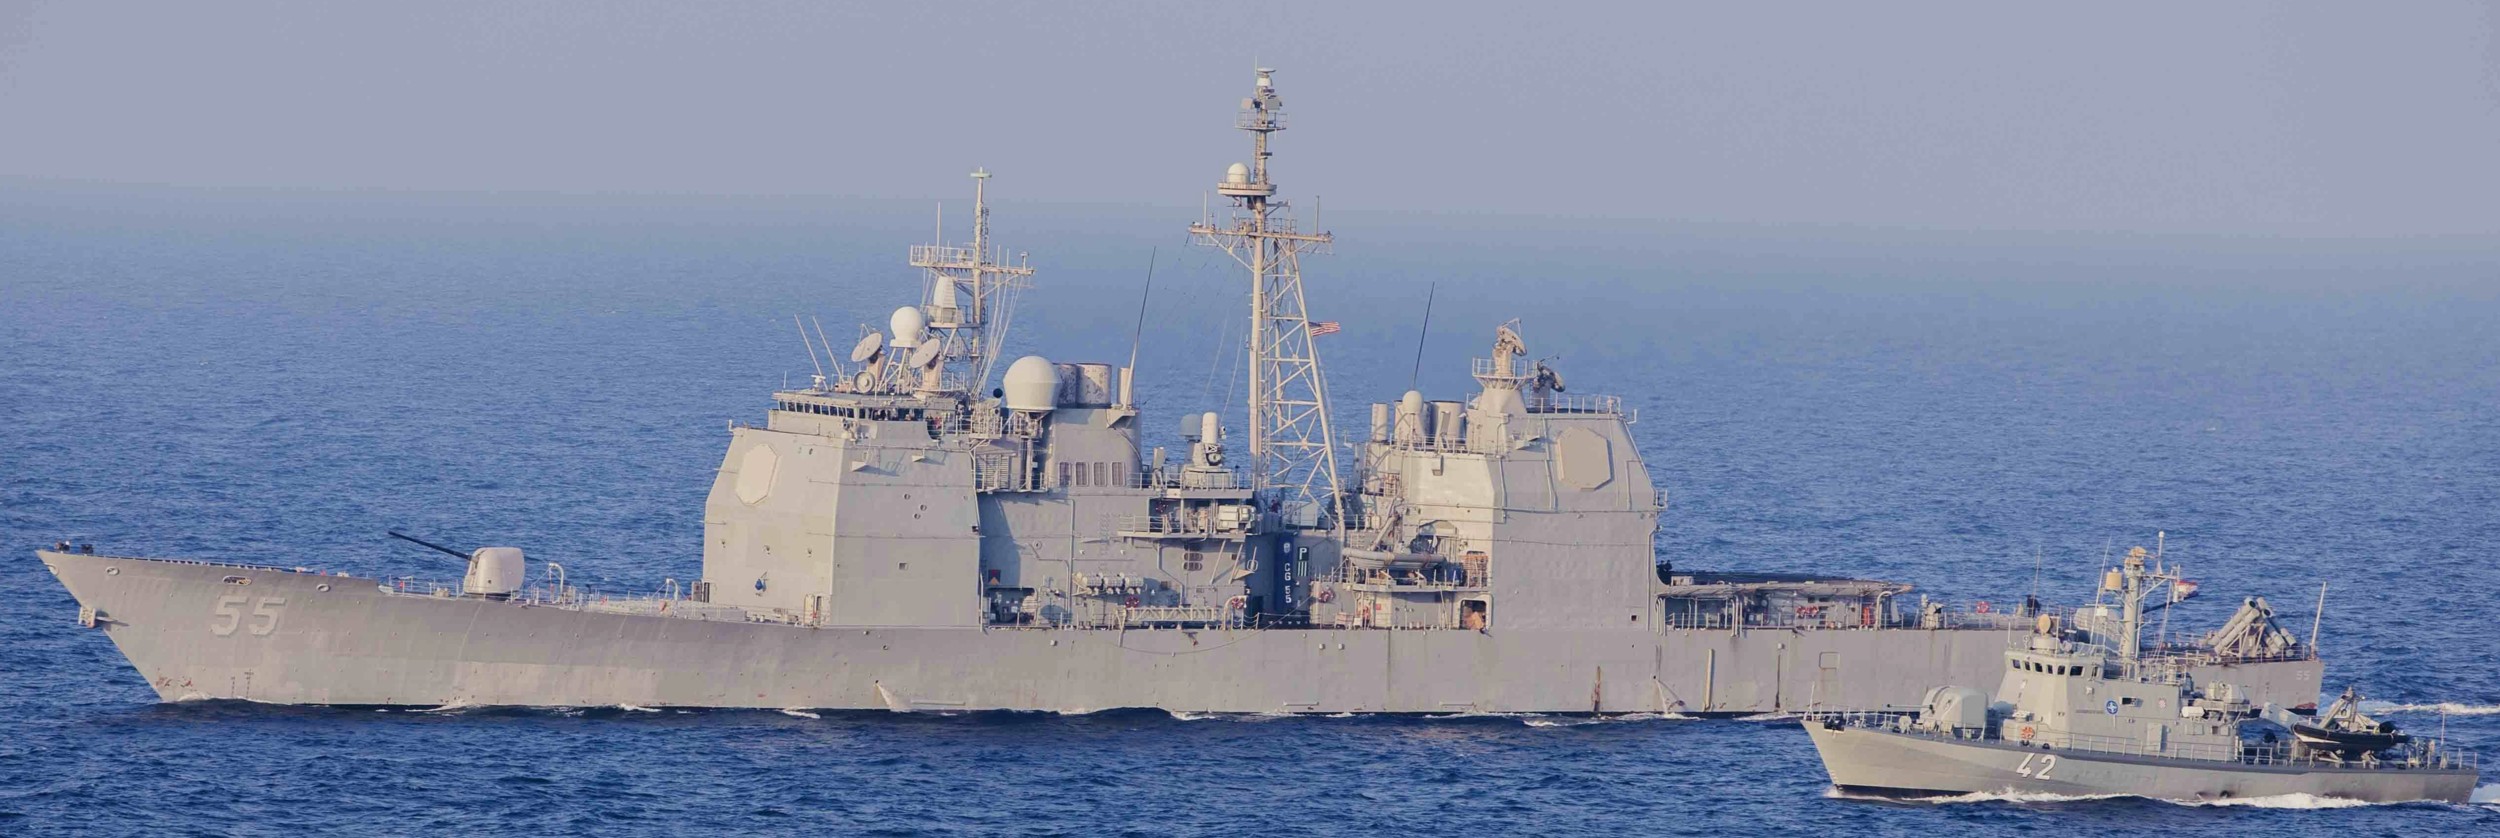 cg-55 uss leyte gulf ticonderoga class guided missile cruiser aegis us navy adriatic sea croatia 82